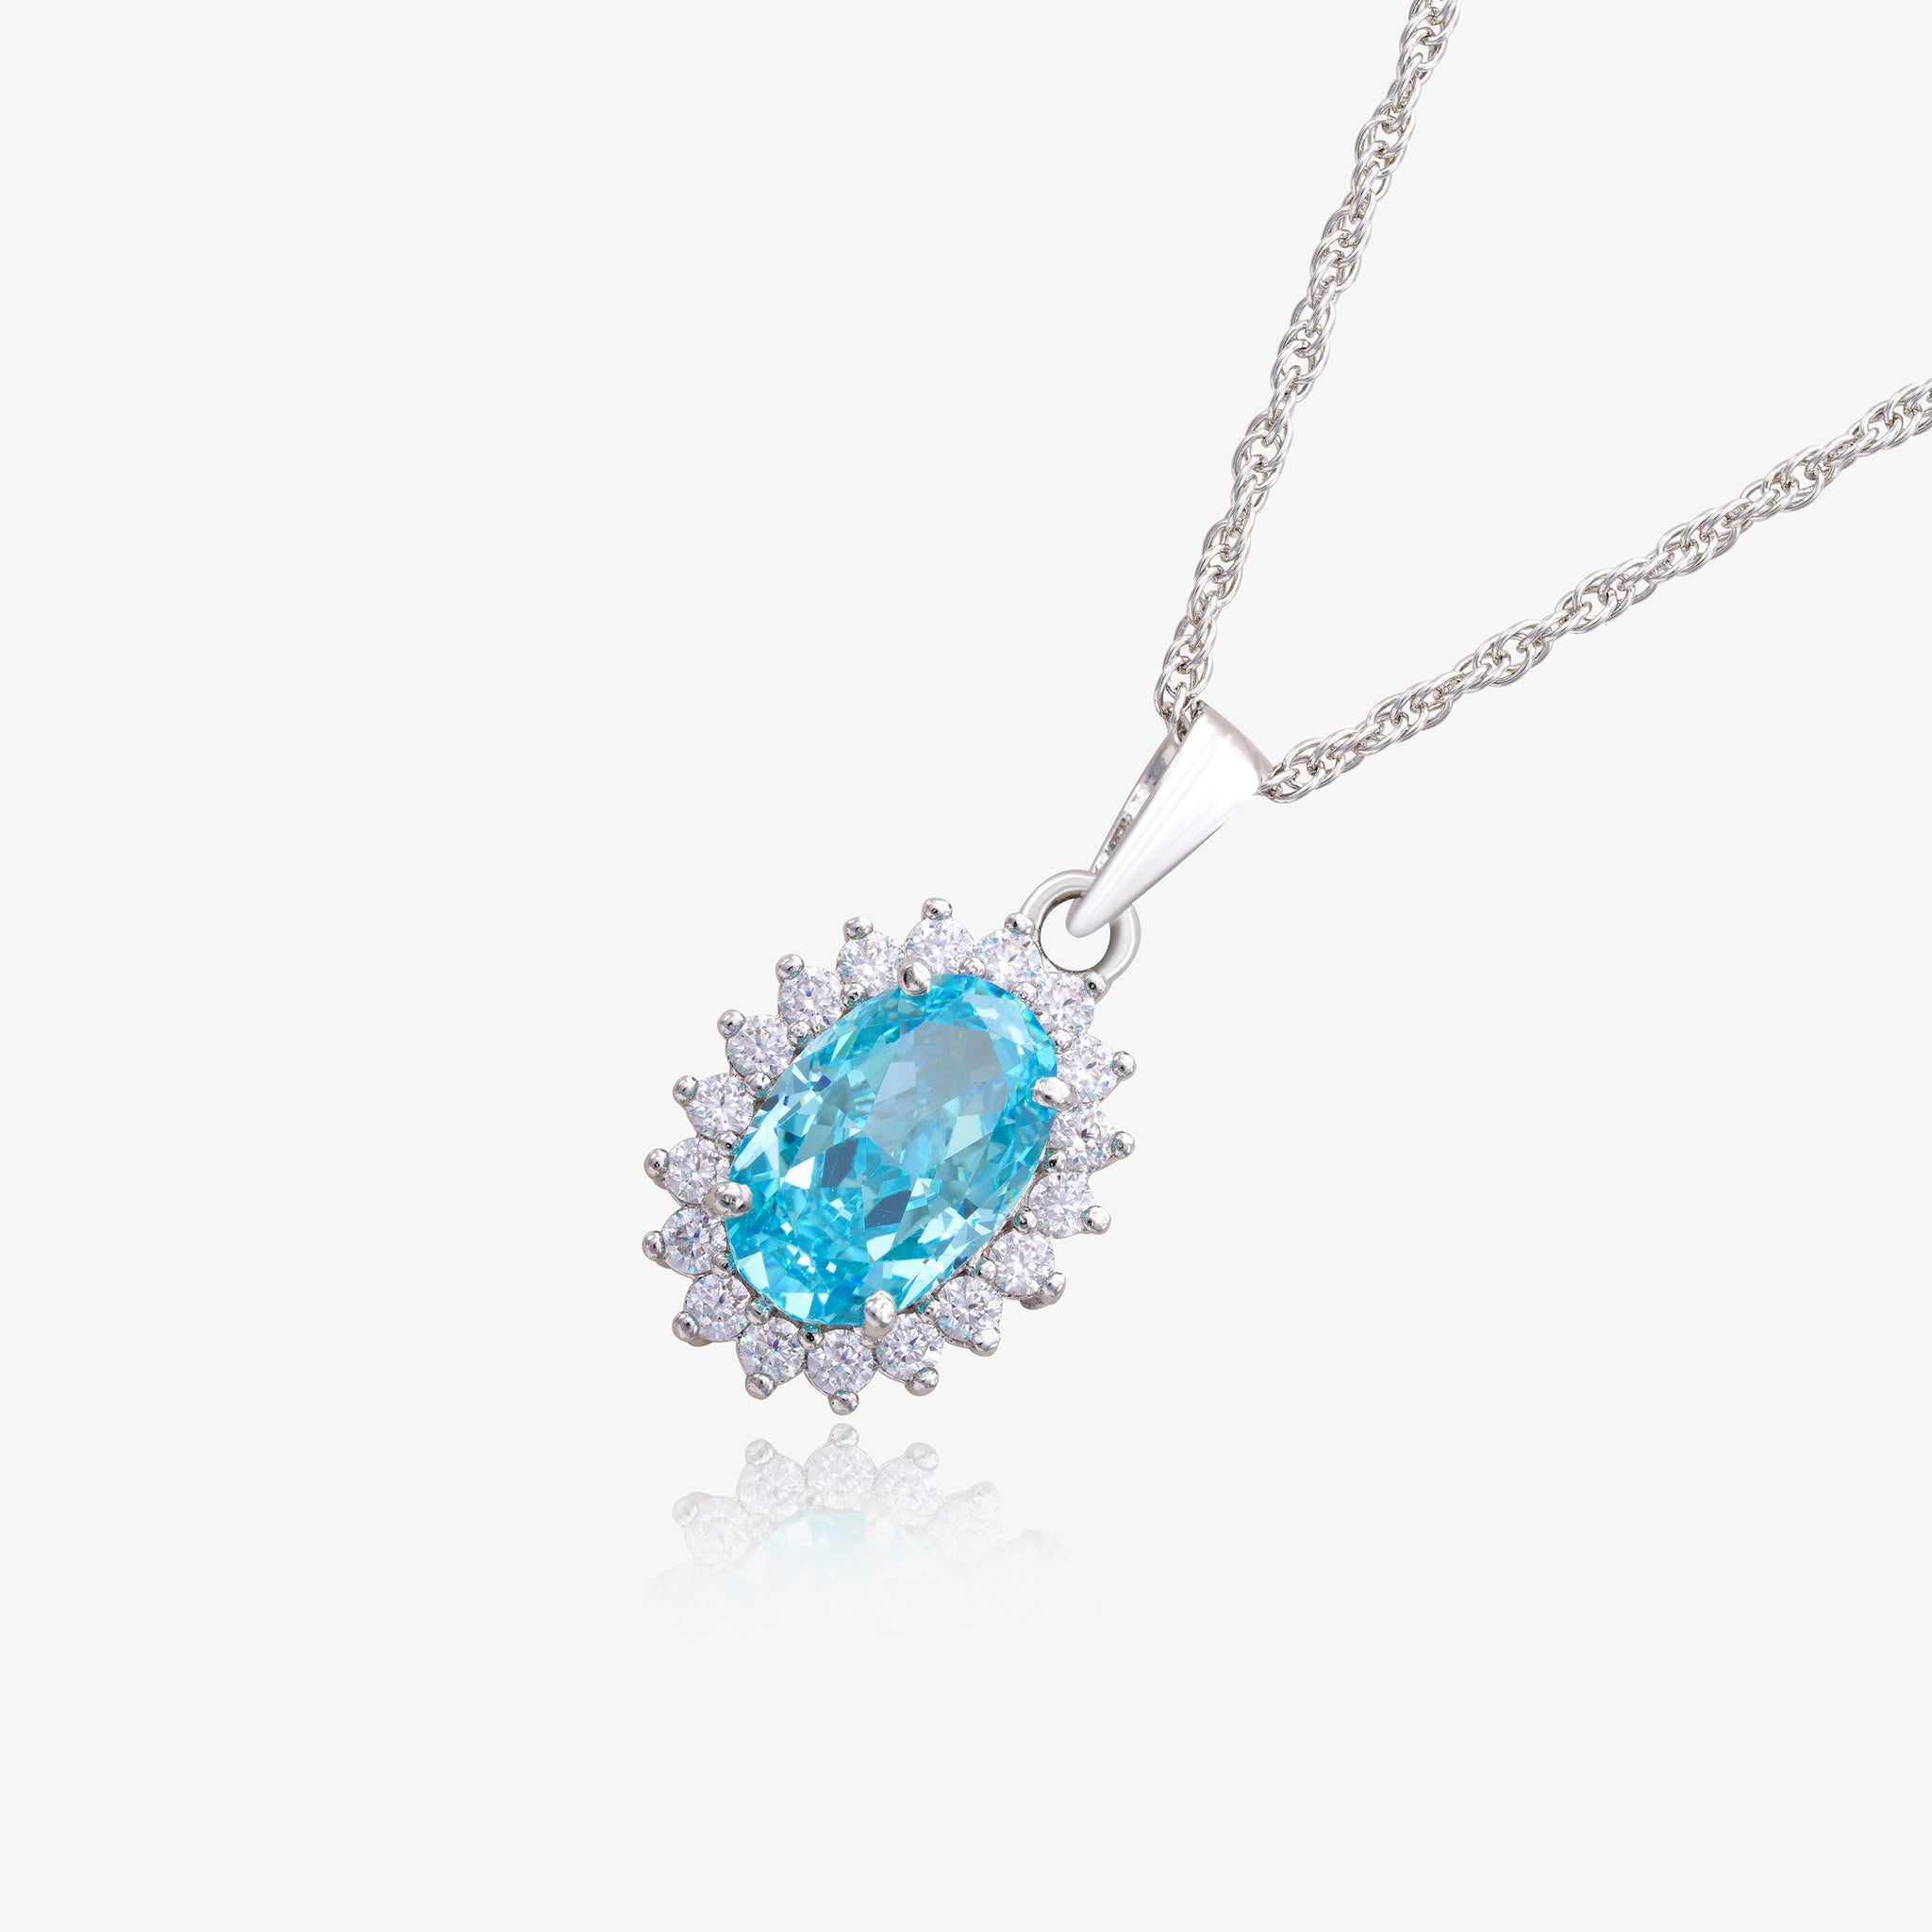 Aquamarine Blue Oval Topaz Premium Natural Gemstone Pendant Chain In 925 Sterling Silver